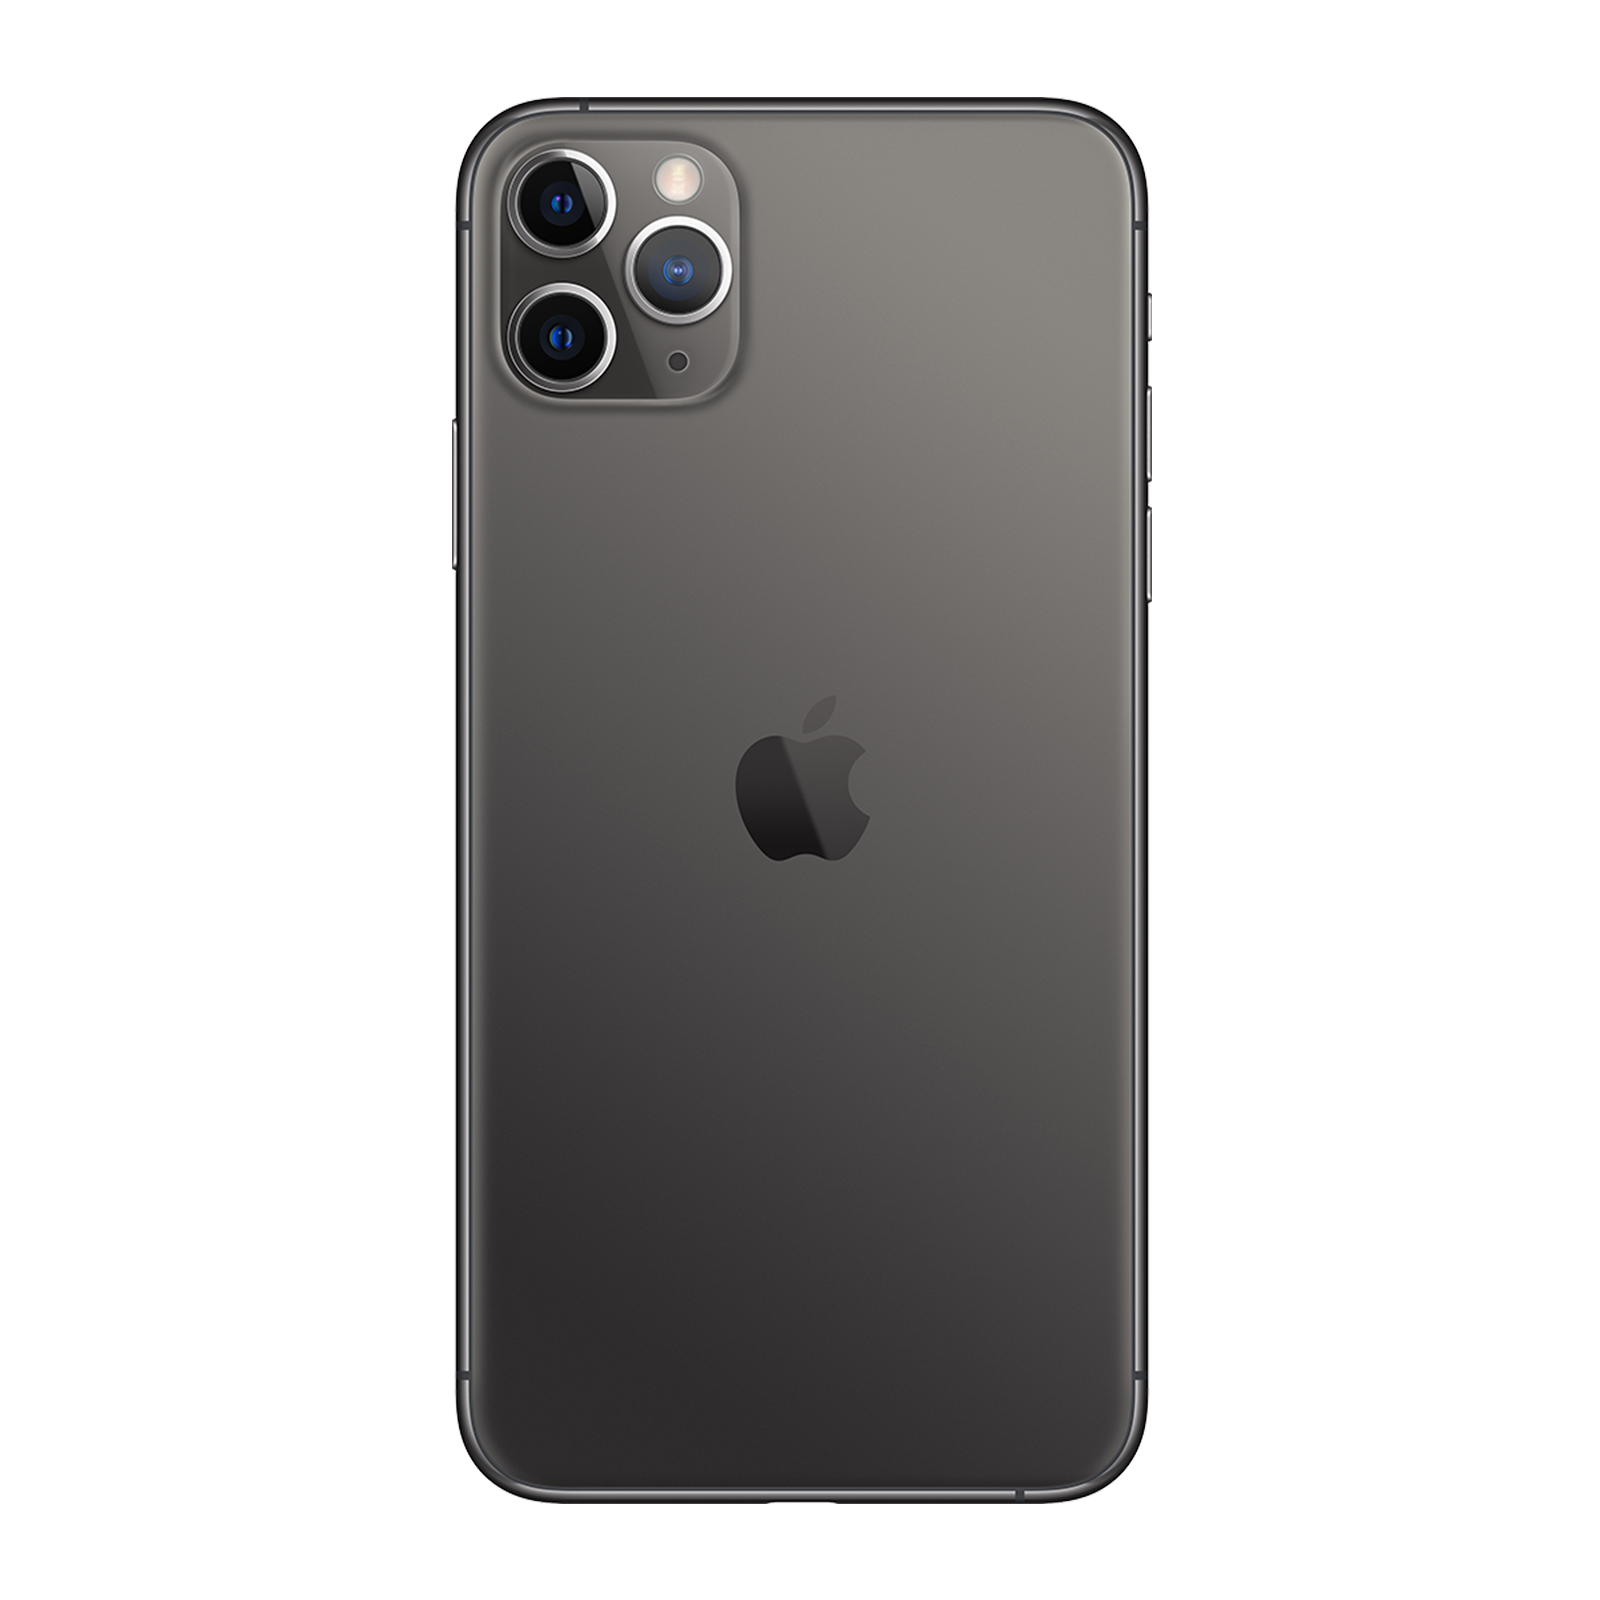 Apple iPhone 11 Pro Max 512GB Space Grey Good - Unlocked